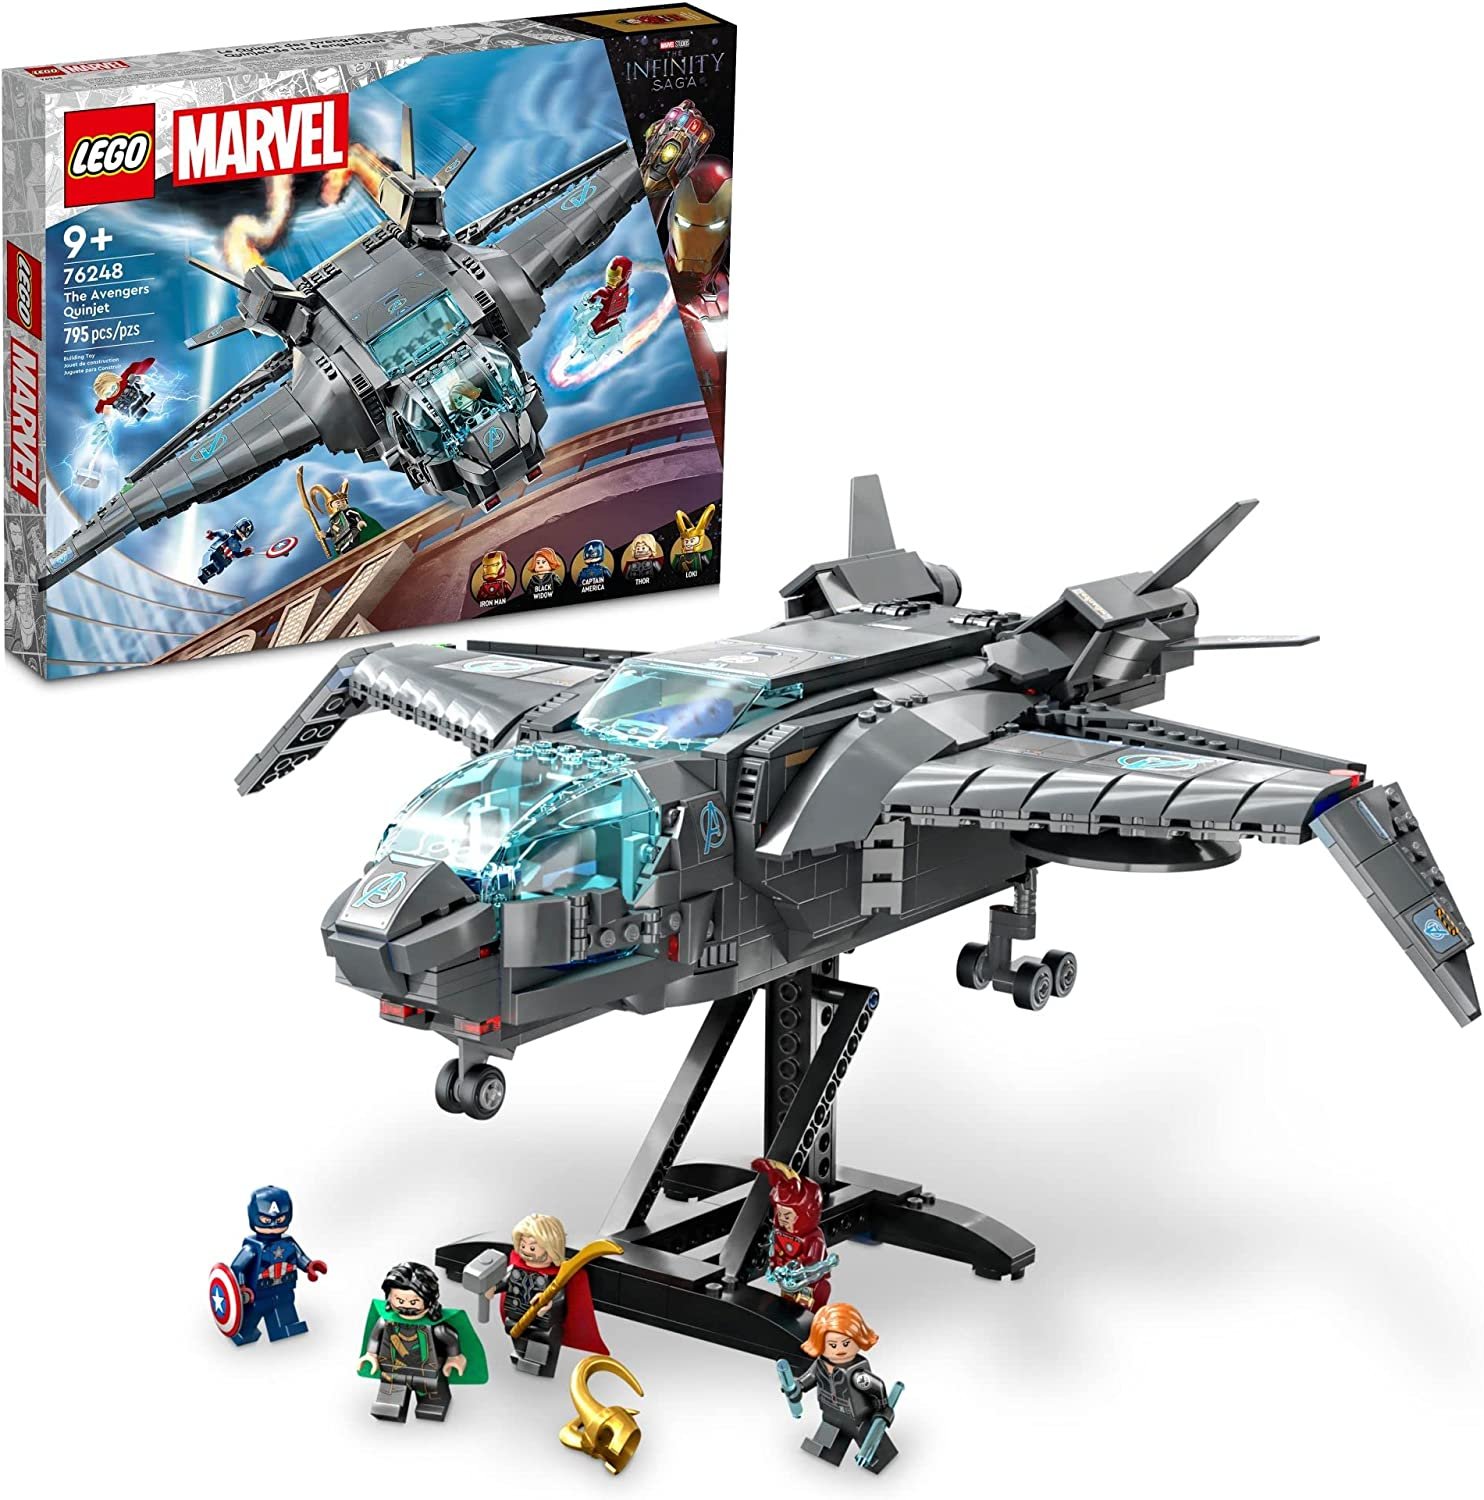 LEGO Marvel The Avengers Quinjet 76248 Building Set